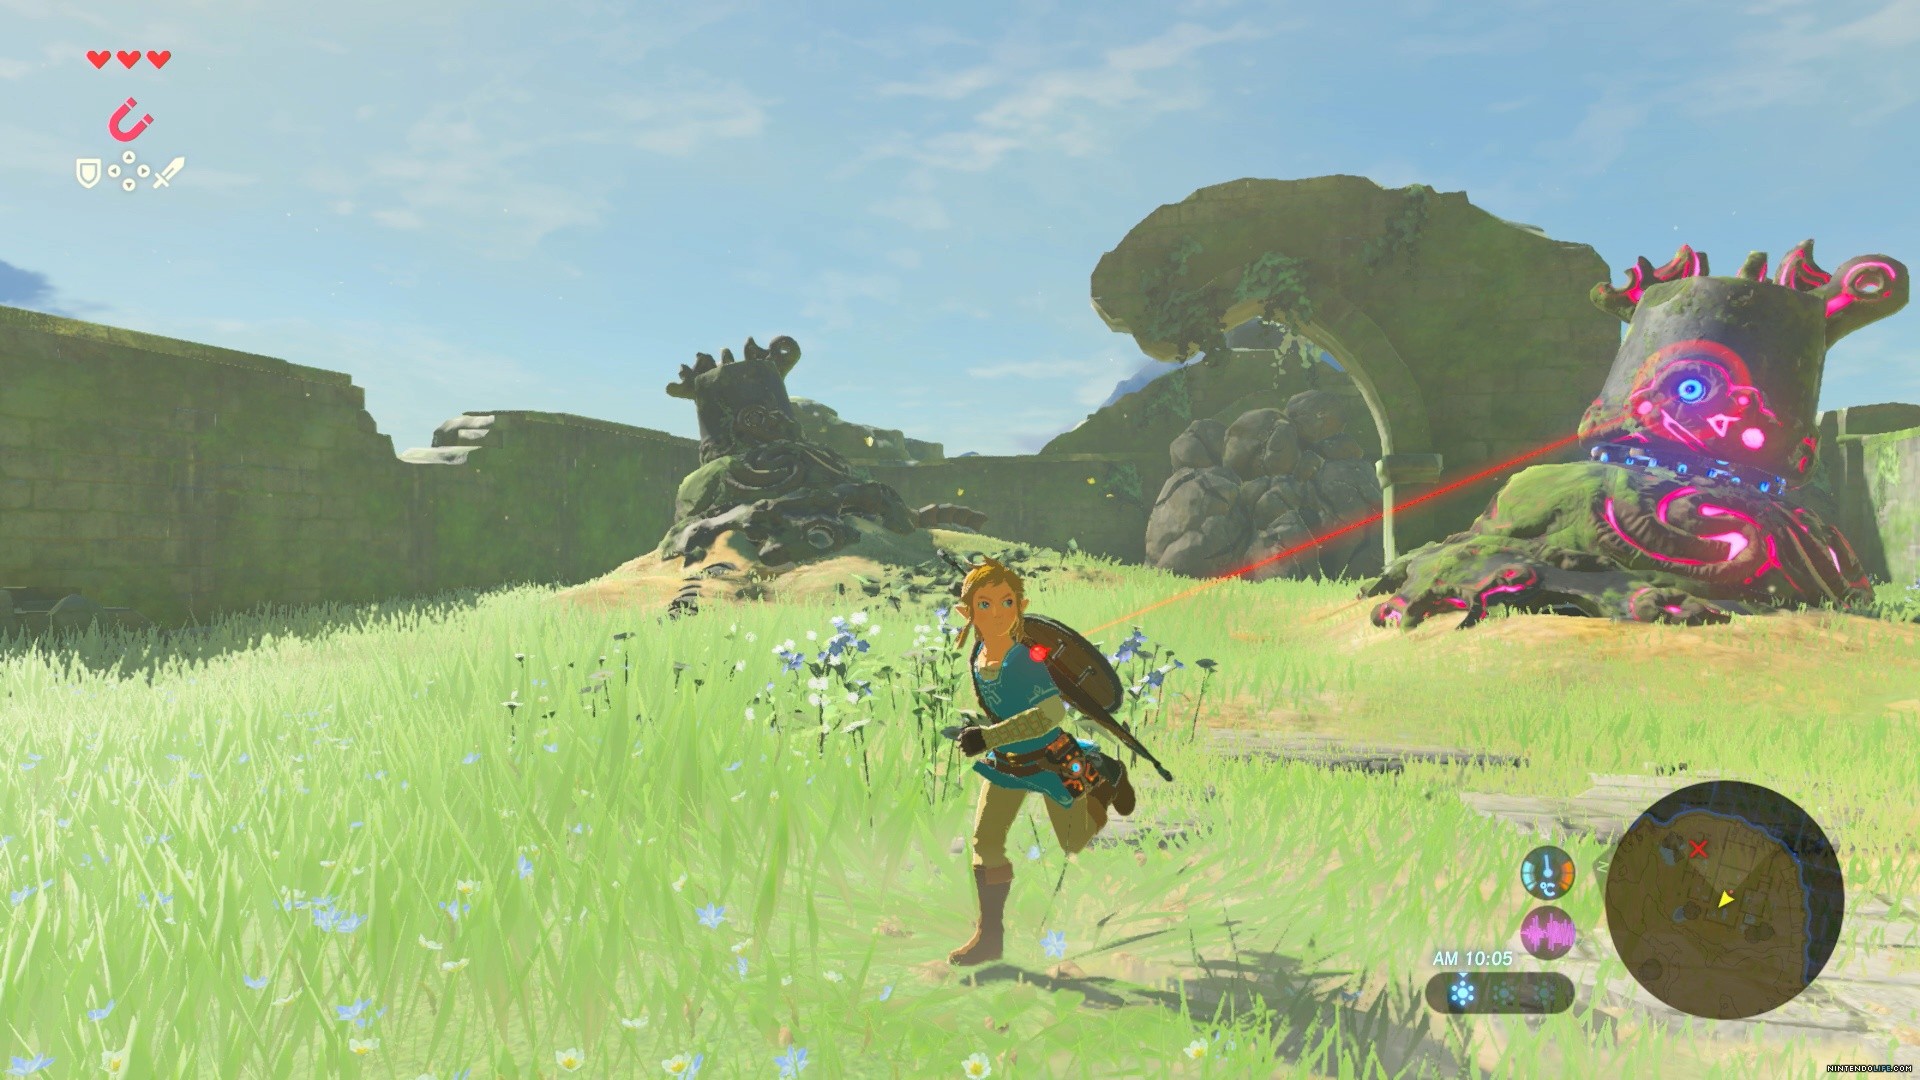 Buy The Legend of Zelda: Breath of the Wild Switch Nintendo Eshop